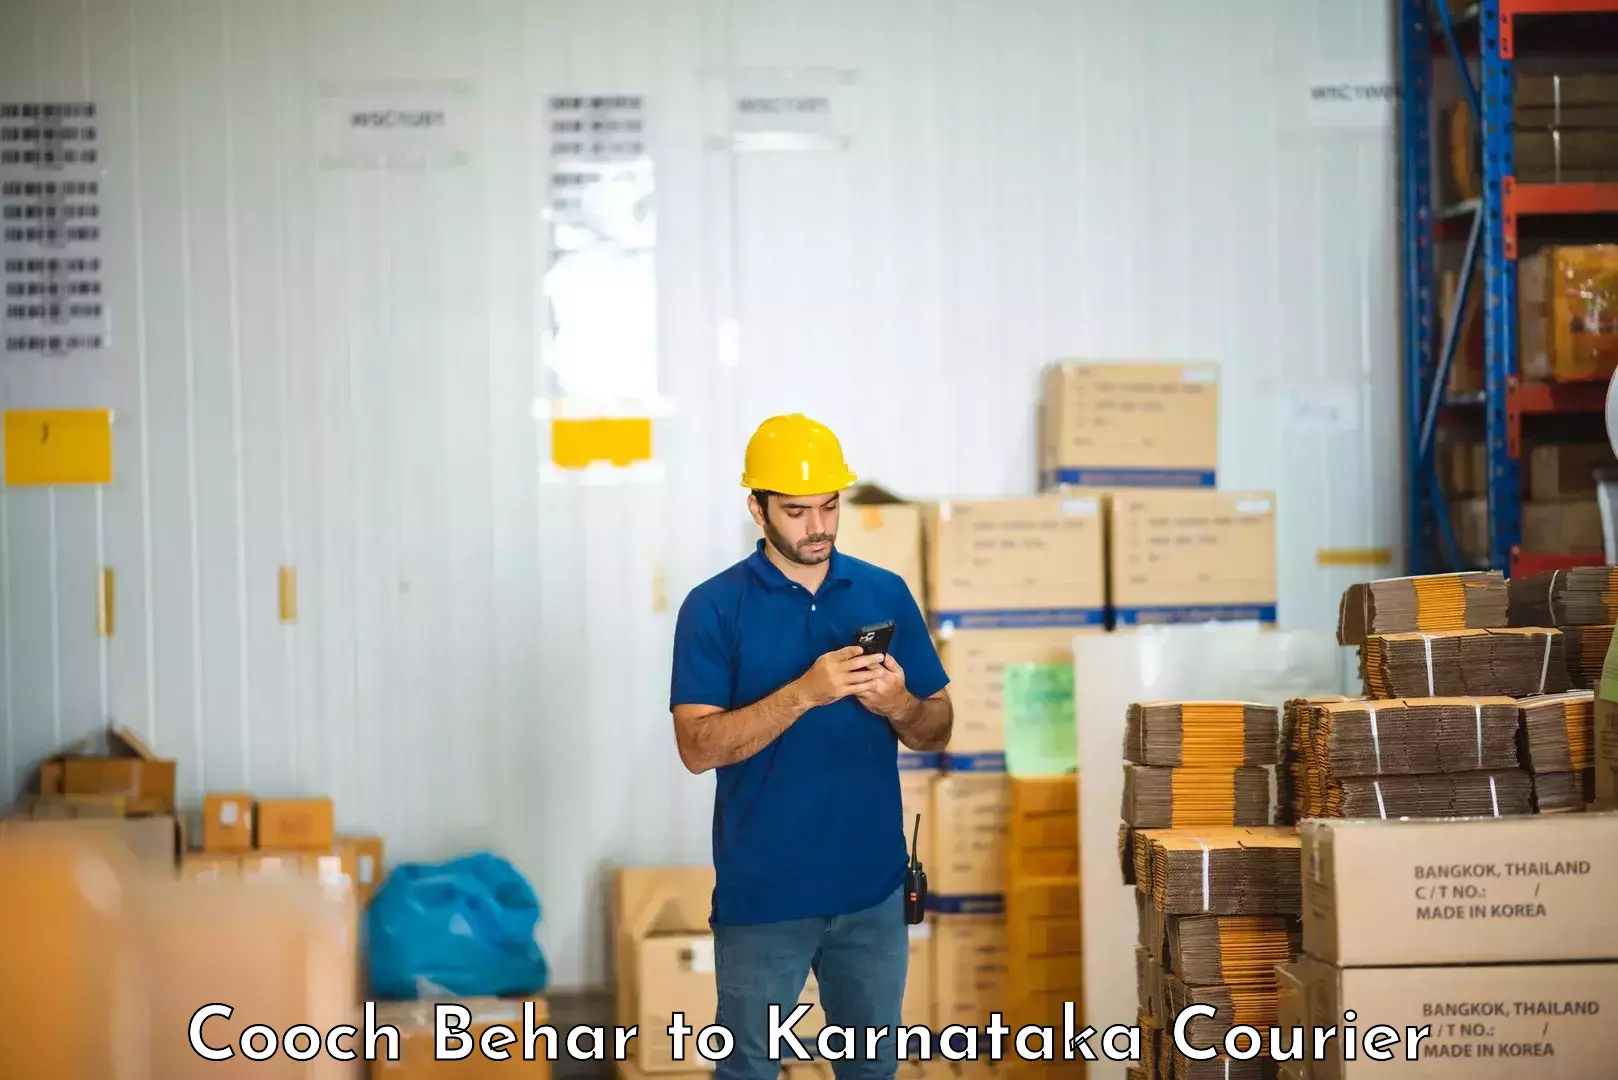 Furniture delivery service Cooch Behar to Muddebihal